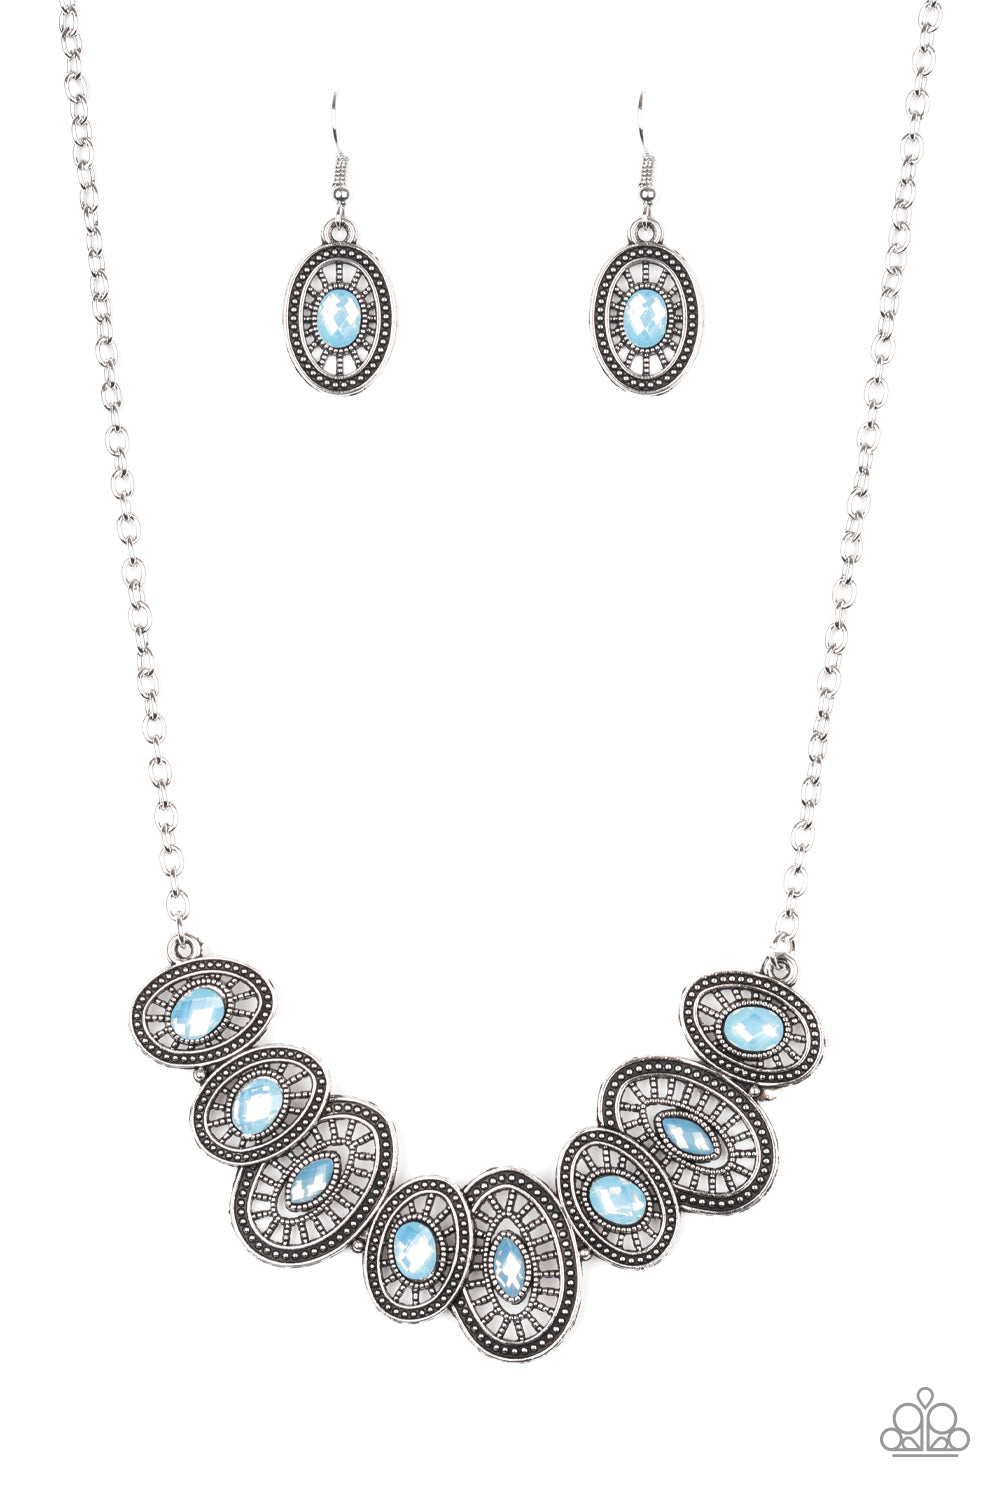 Trinket Trove - Iridescent Blue - Paparazzi Necklace